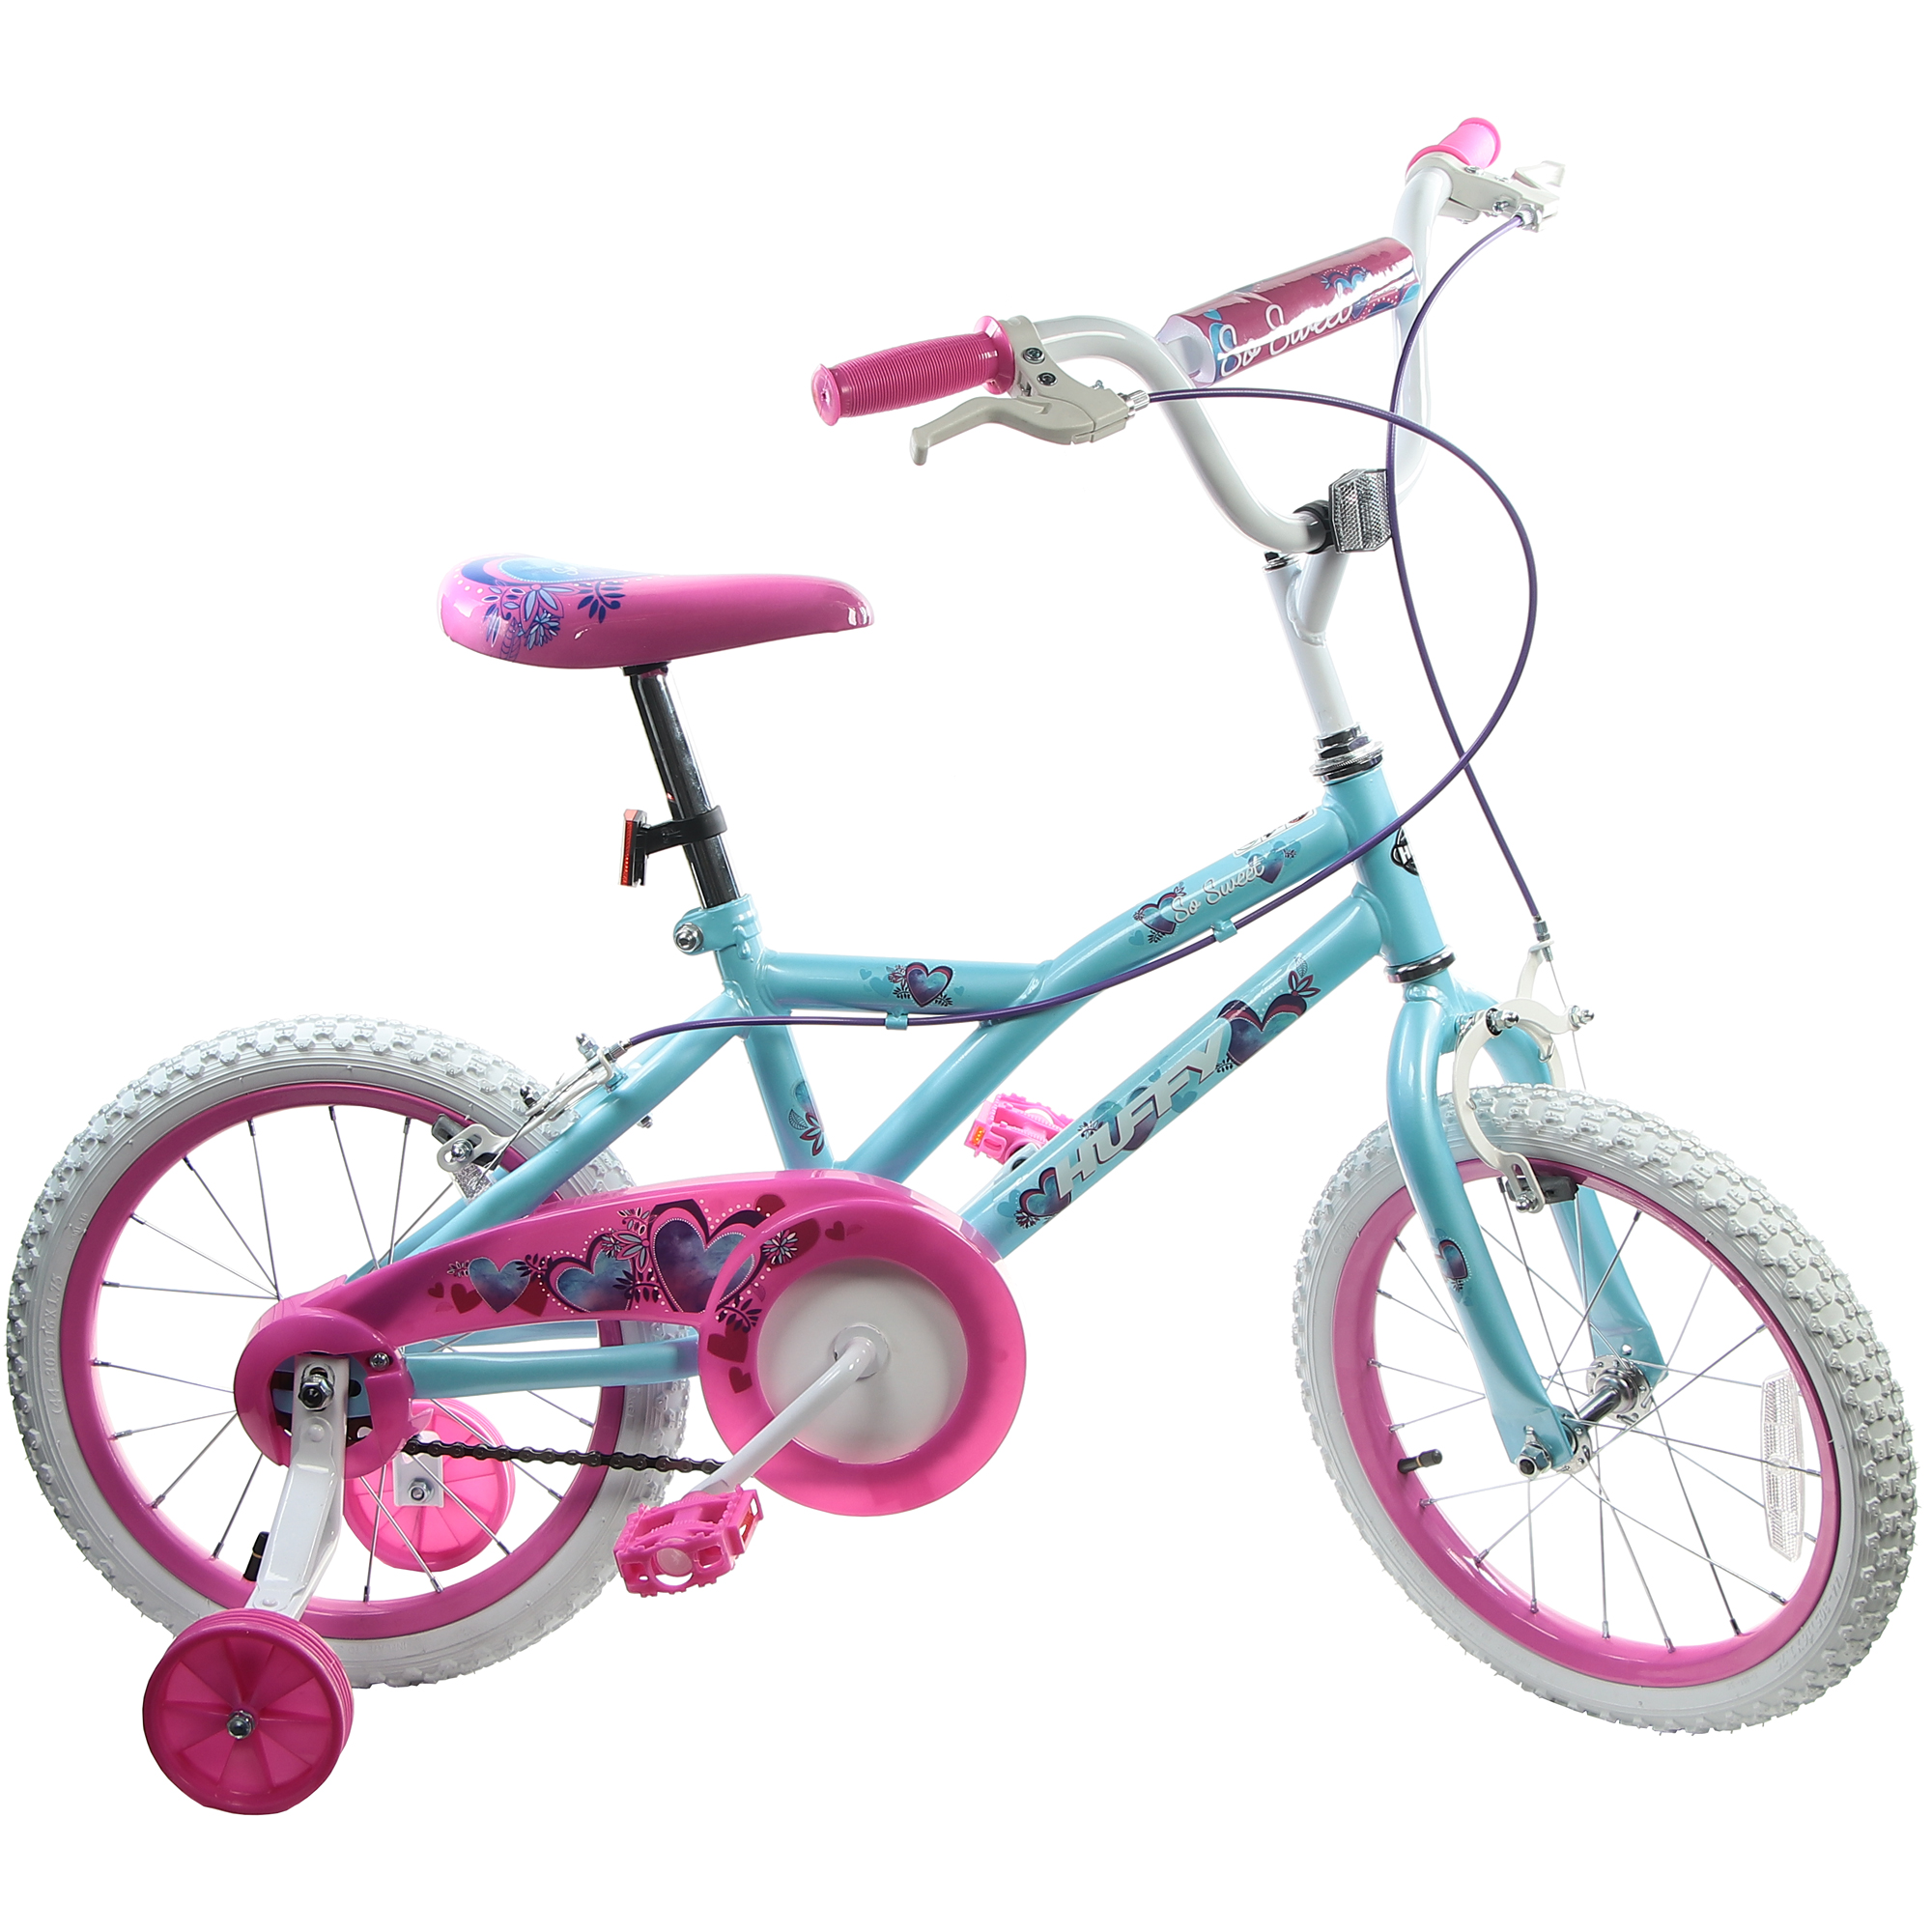 Велосипед детский Huffy So sweet, 16, для девочек велосипед детский huffy so sweet 16 для девочек